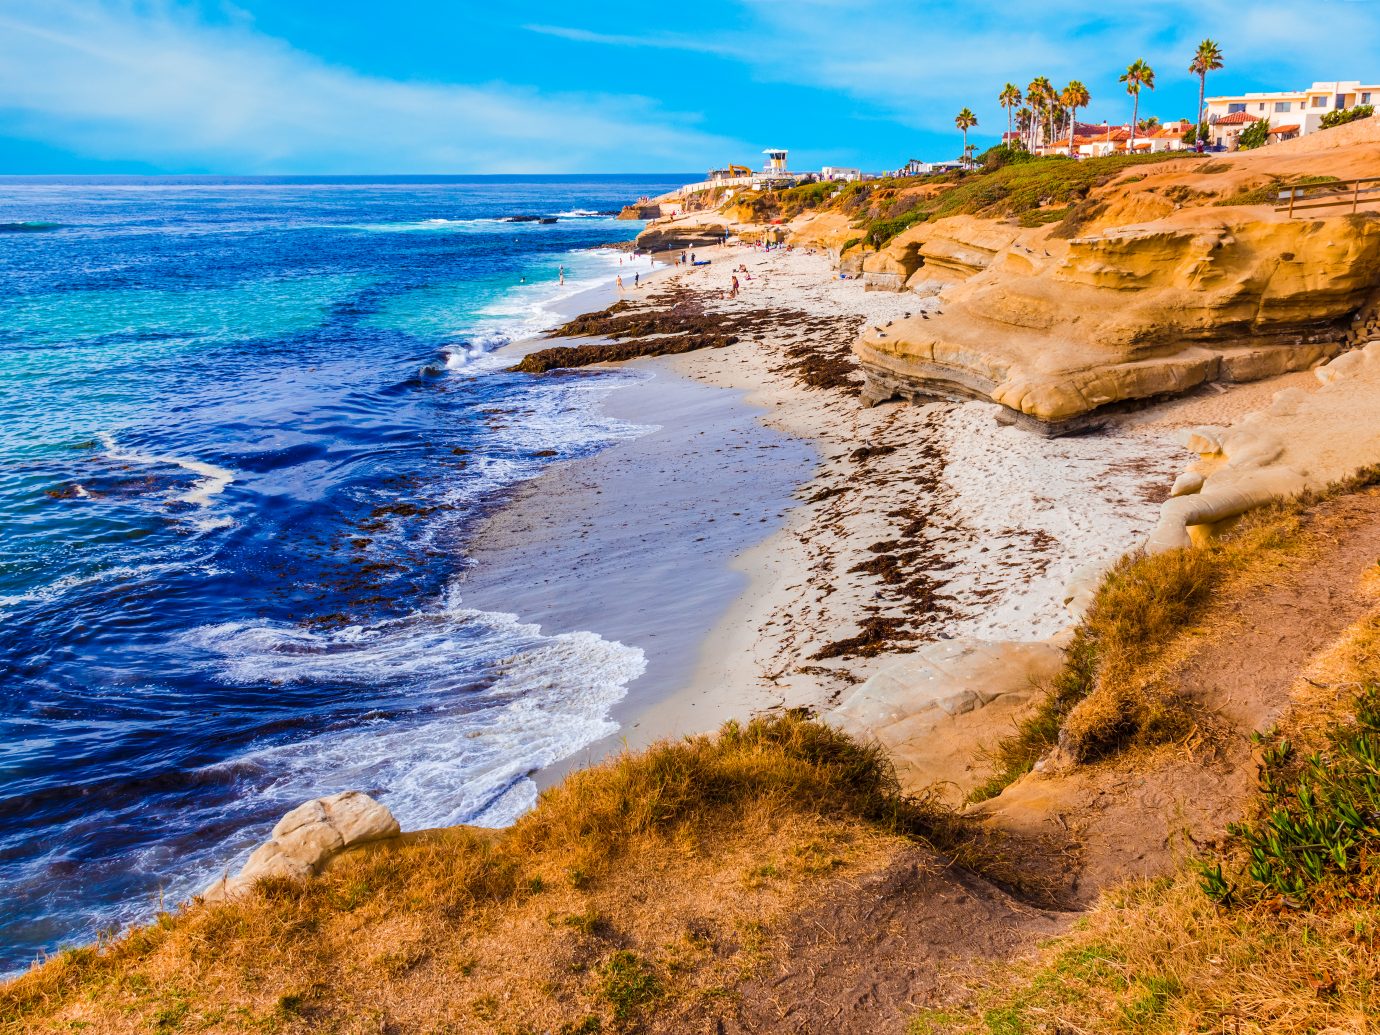 Rocky coastline at La Jolla in Southern California near San Diego